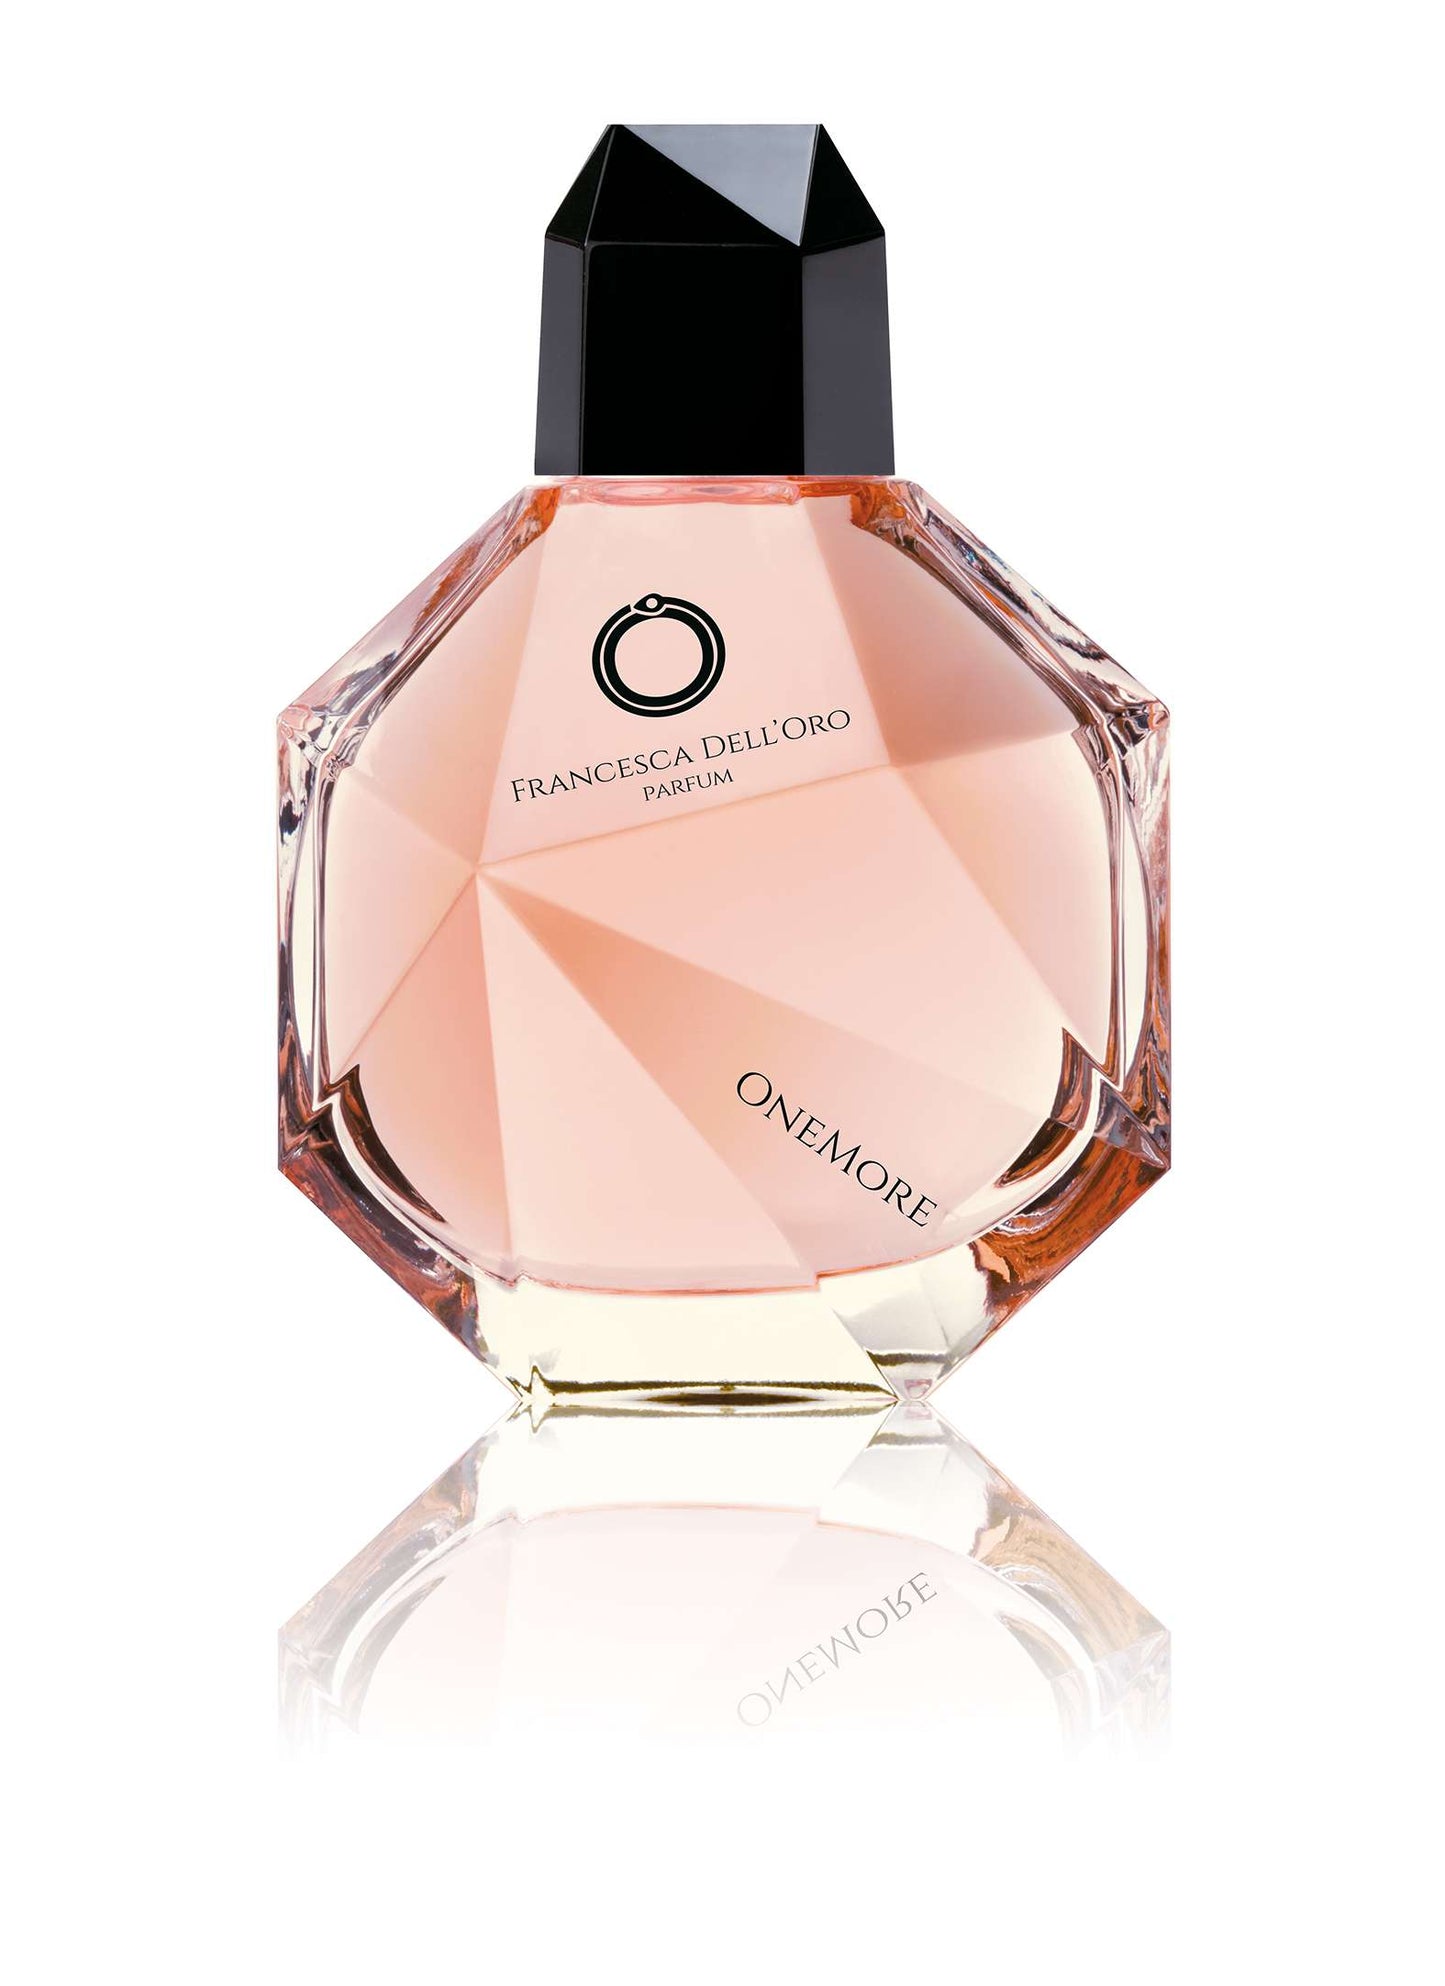 Francesca Dell'Oro Onemore Eau de Parfum 100 ml No Box* | RossoLacca